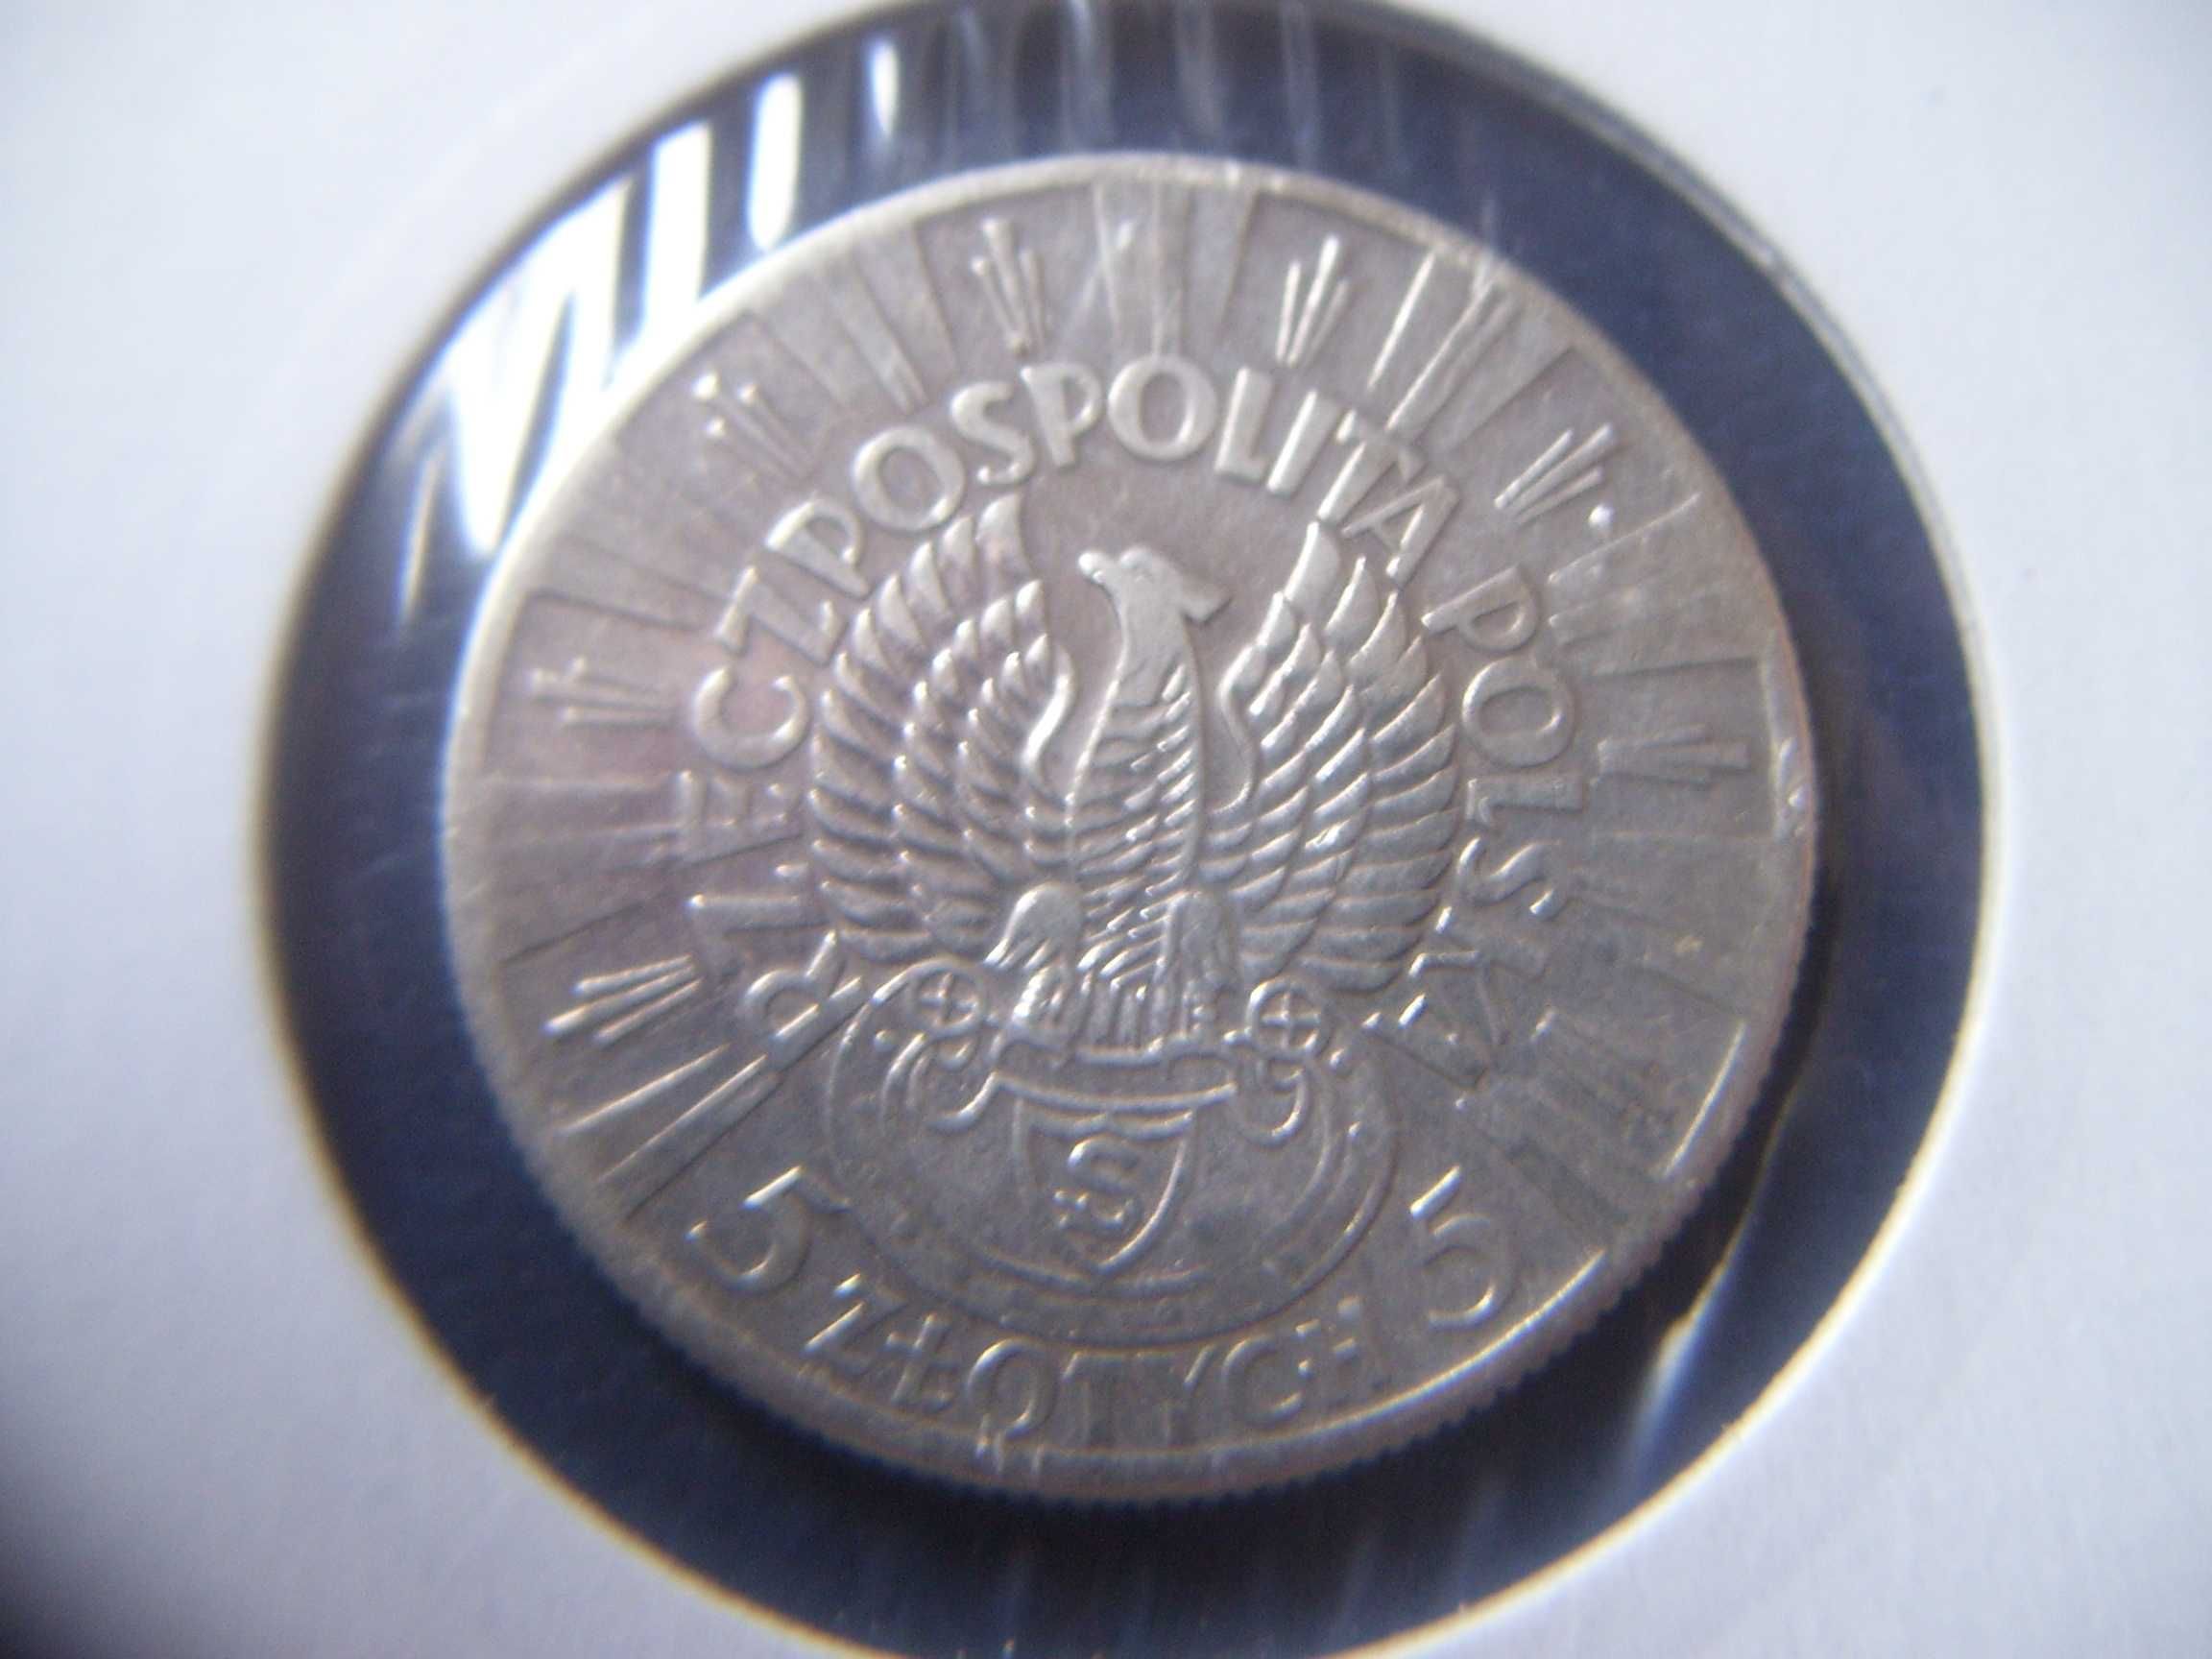 Stare monety L 5 złotych 1934 Strzelecki 2RP srebro